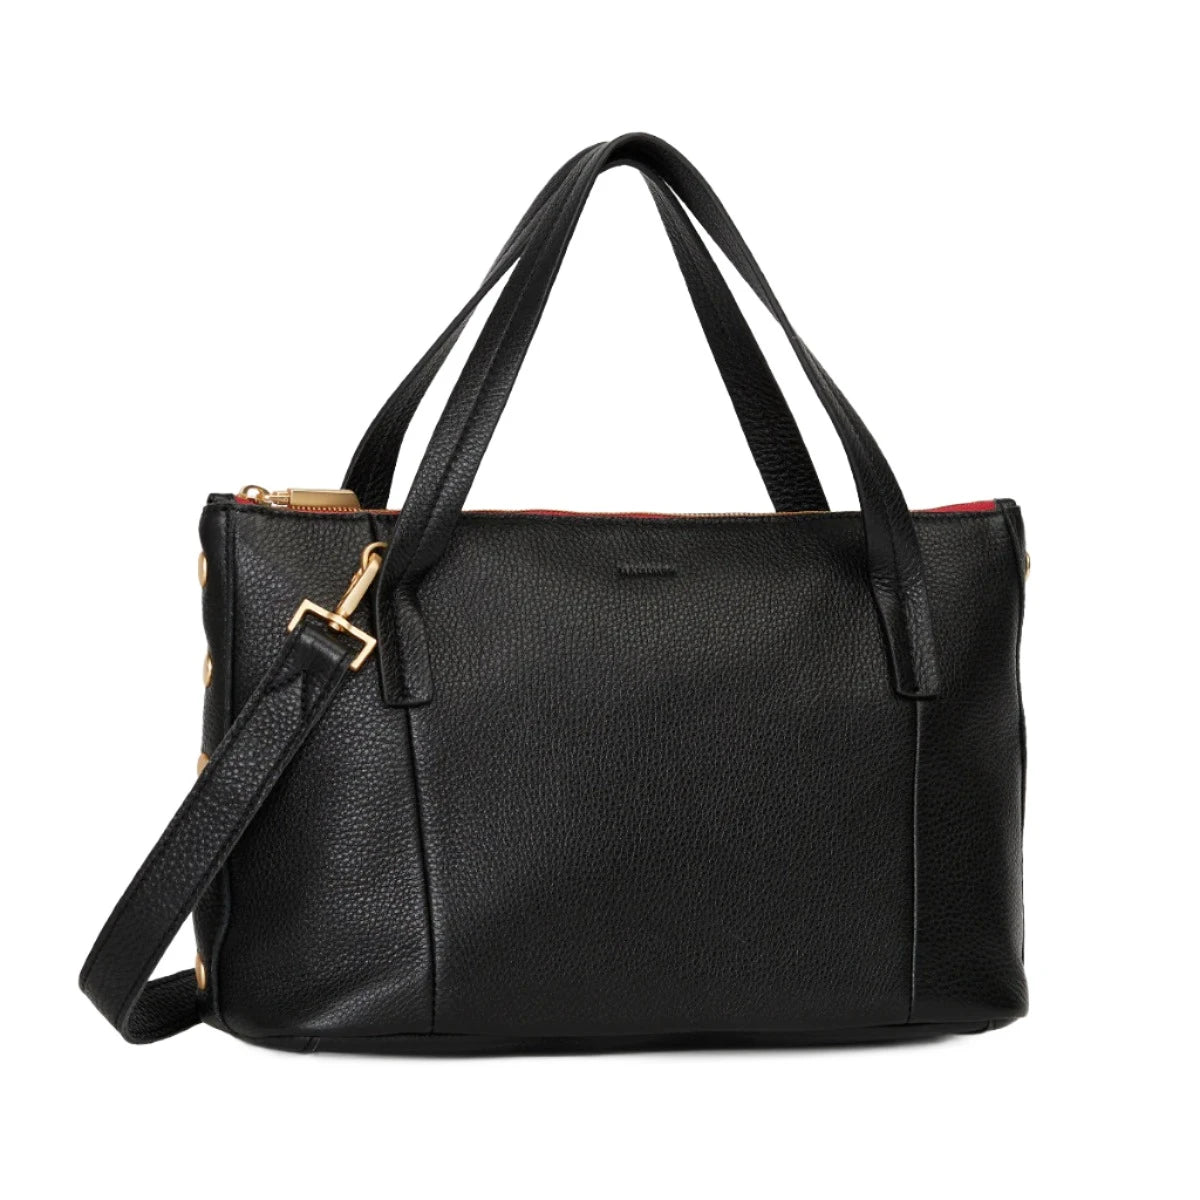 ADDIE MED Handbag in Black with Red Zipper